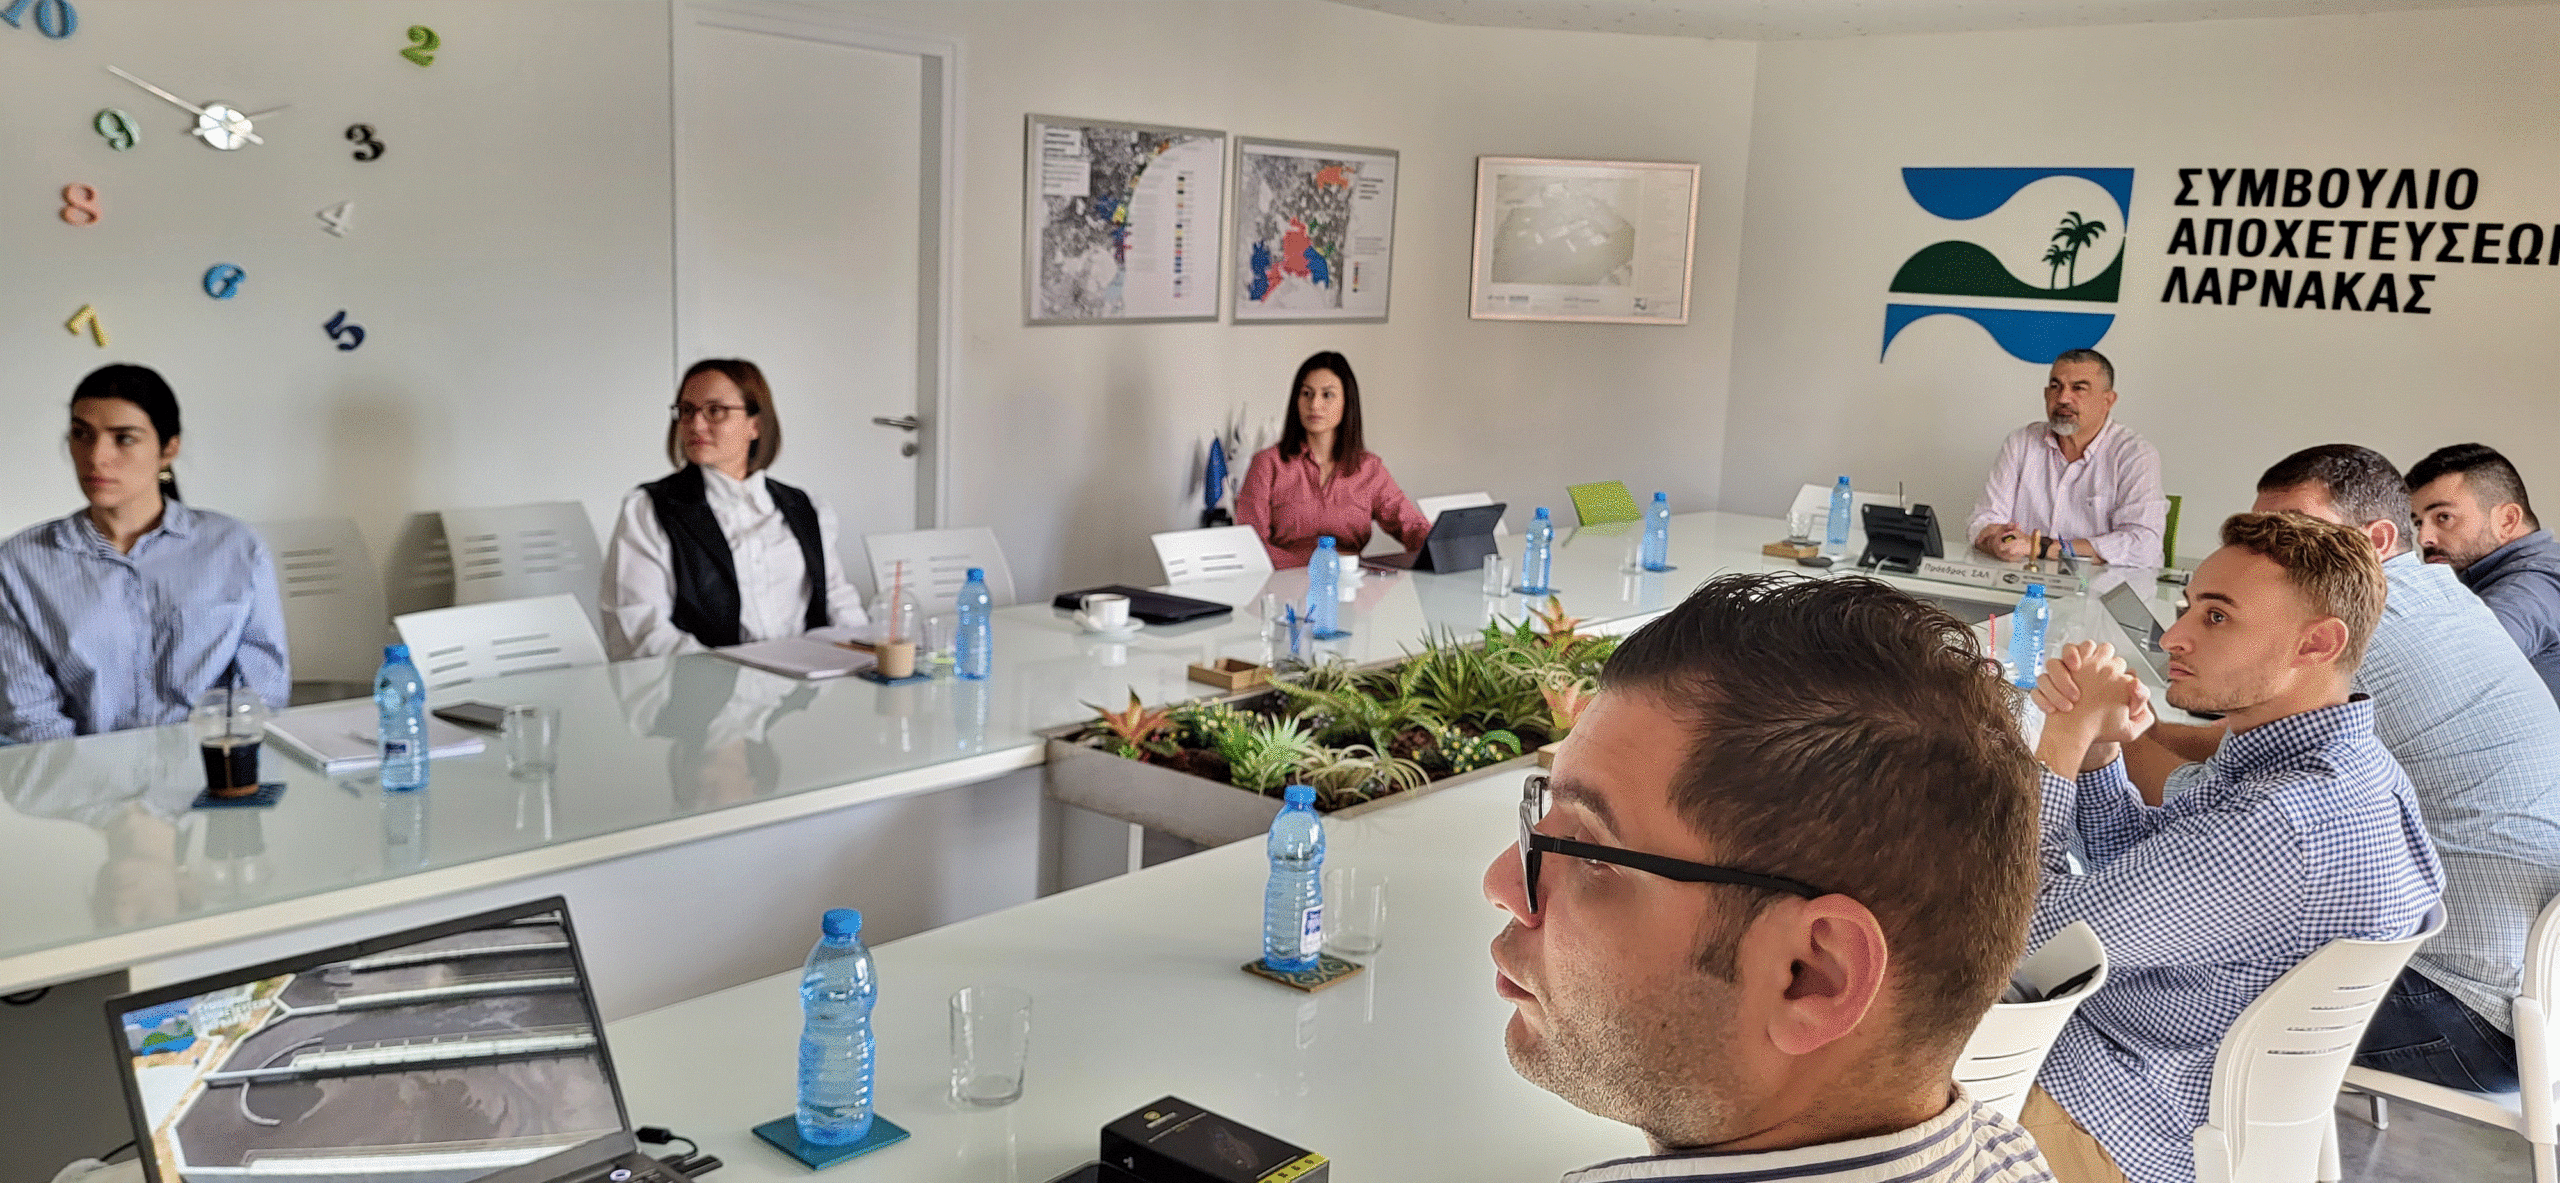 Eπίσκεψη Επιτρόπου Περιβάλλοντος στα γραφεία του Συμβουλίου Αποχετεύσεως Λάρνακας (φώτο)